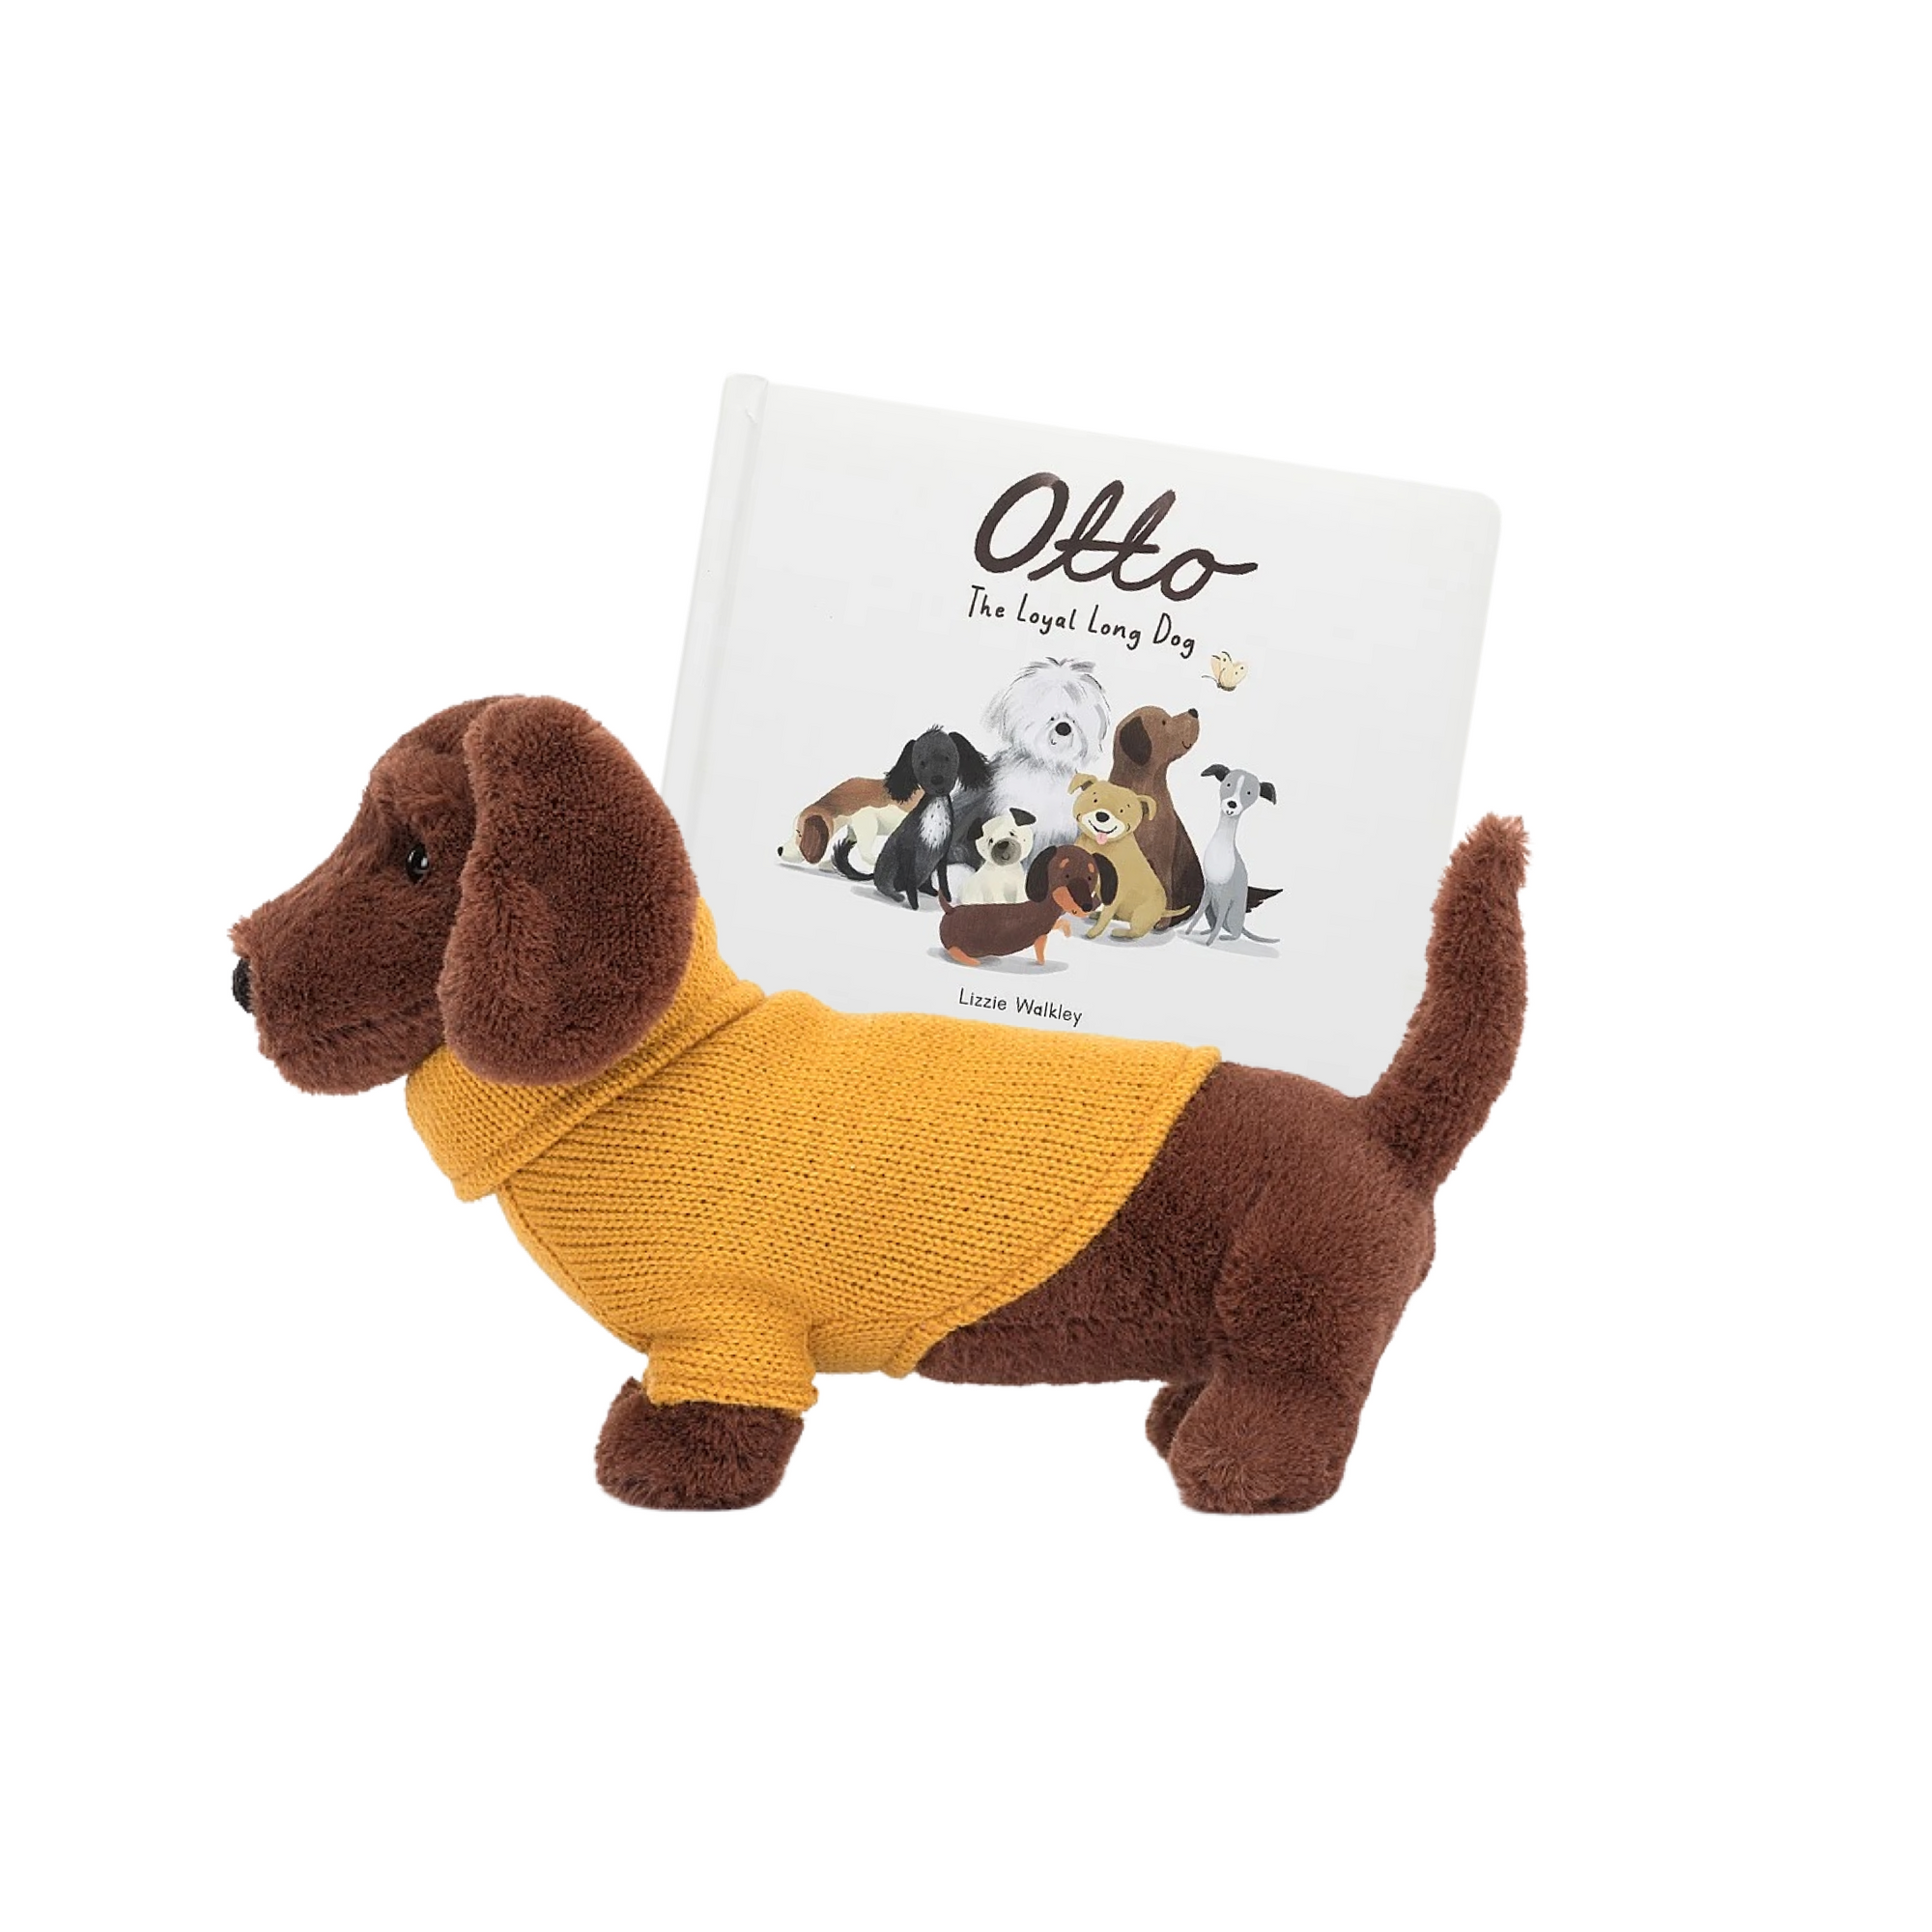 Otto The Loyal Long Dog Plush